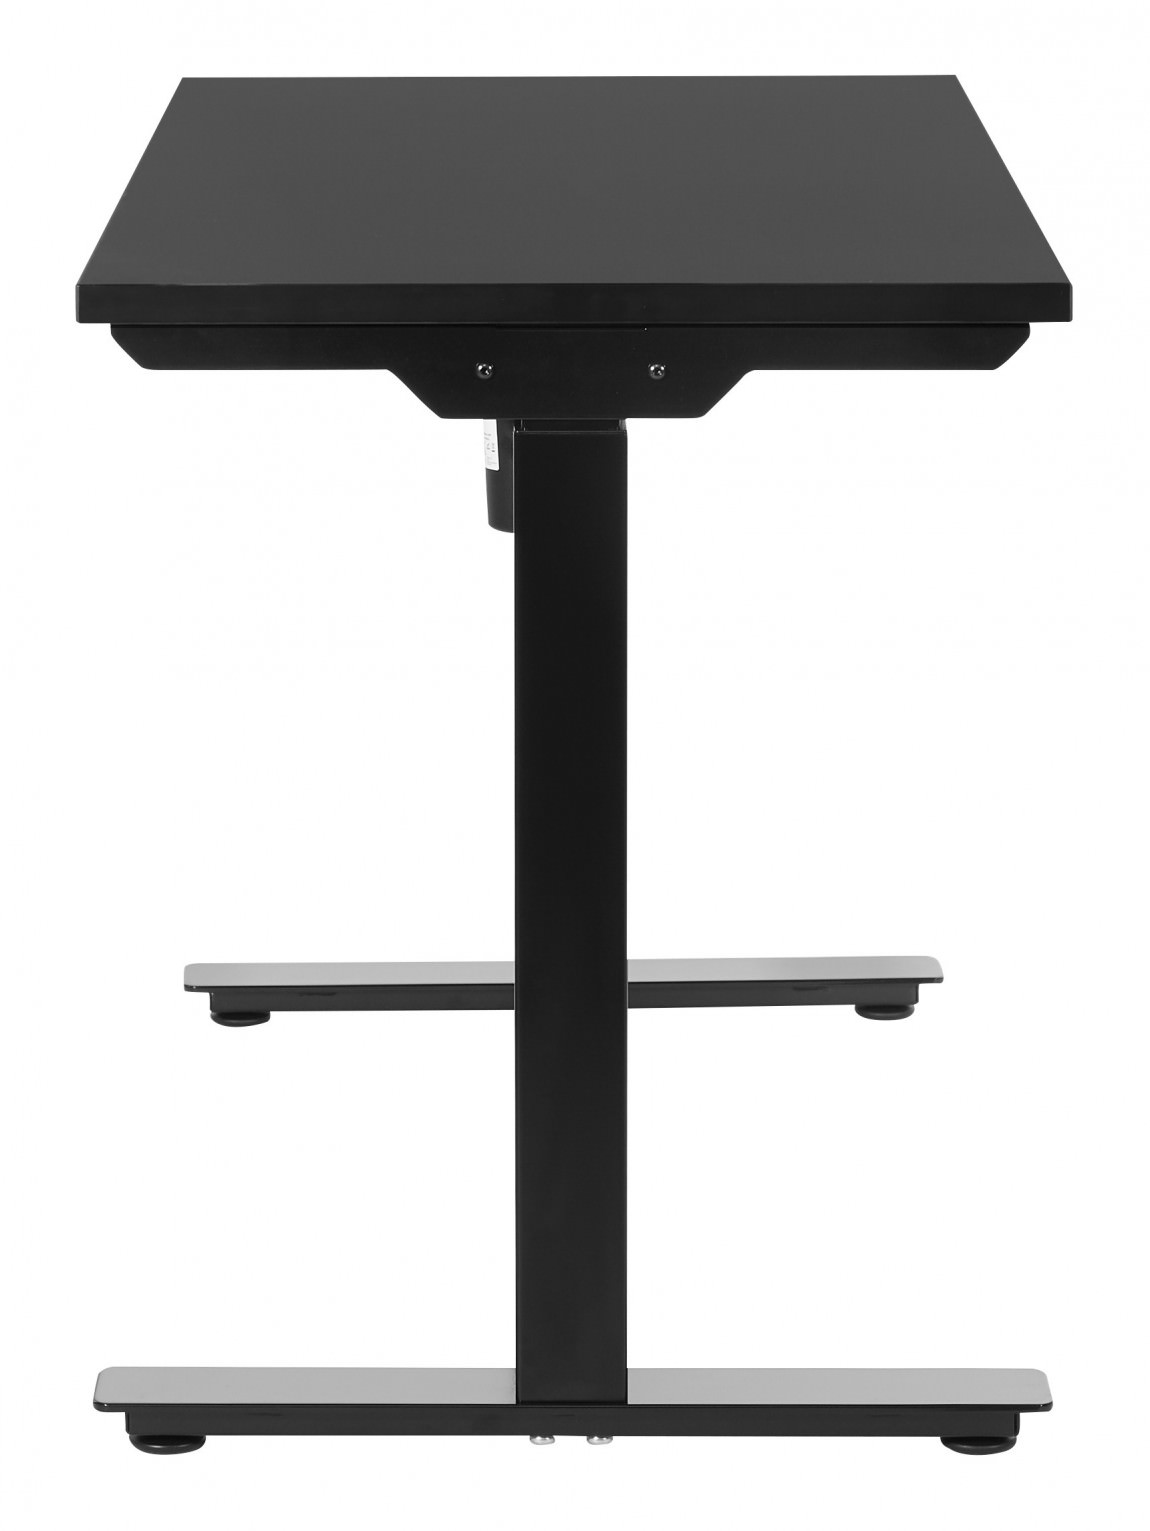 Prado Height Adjustable Table